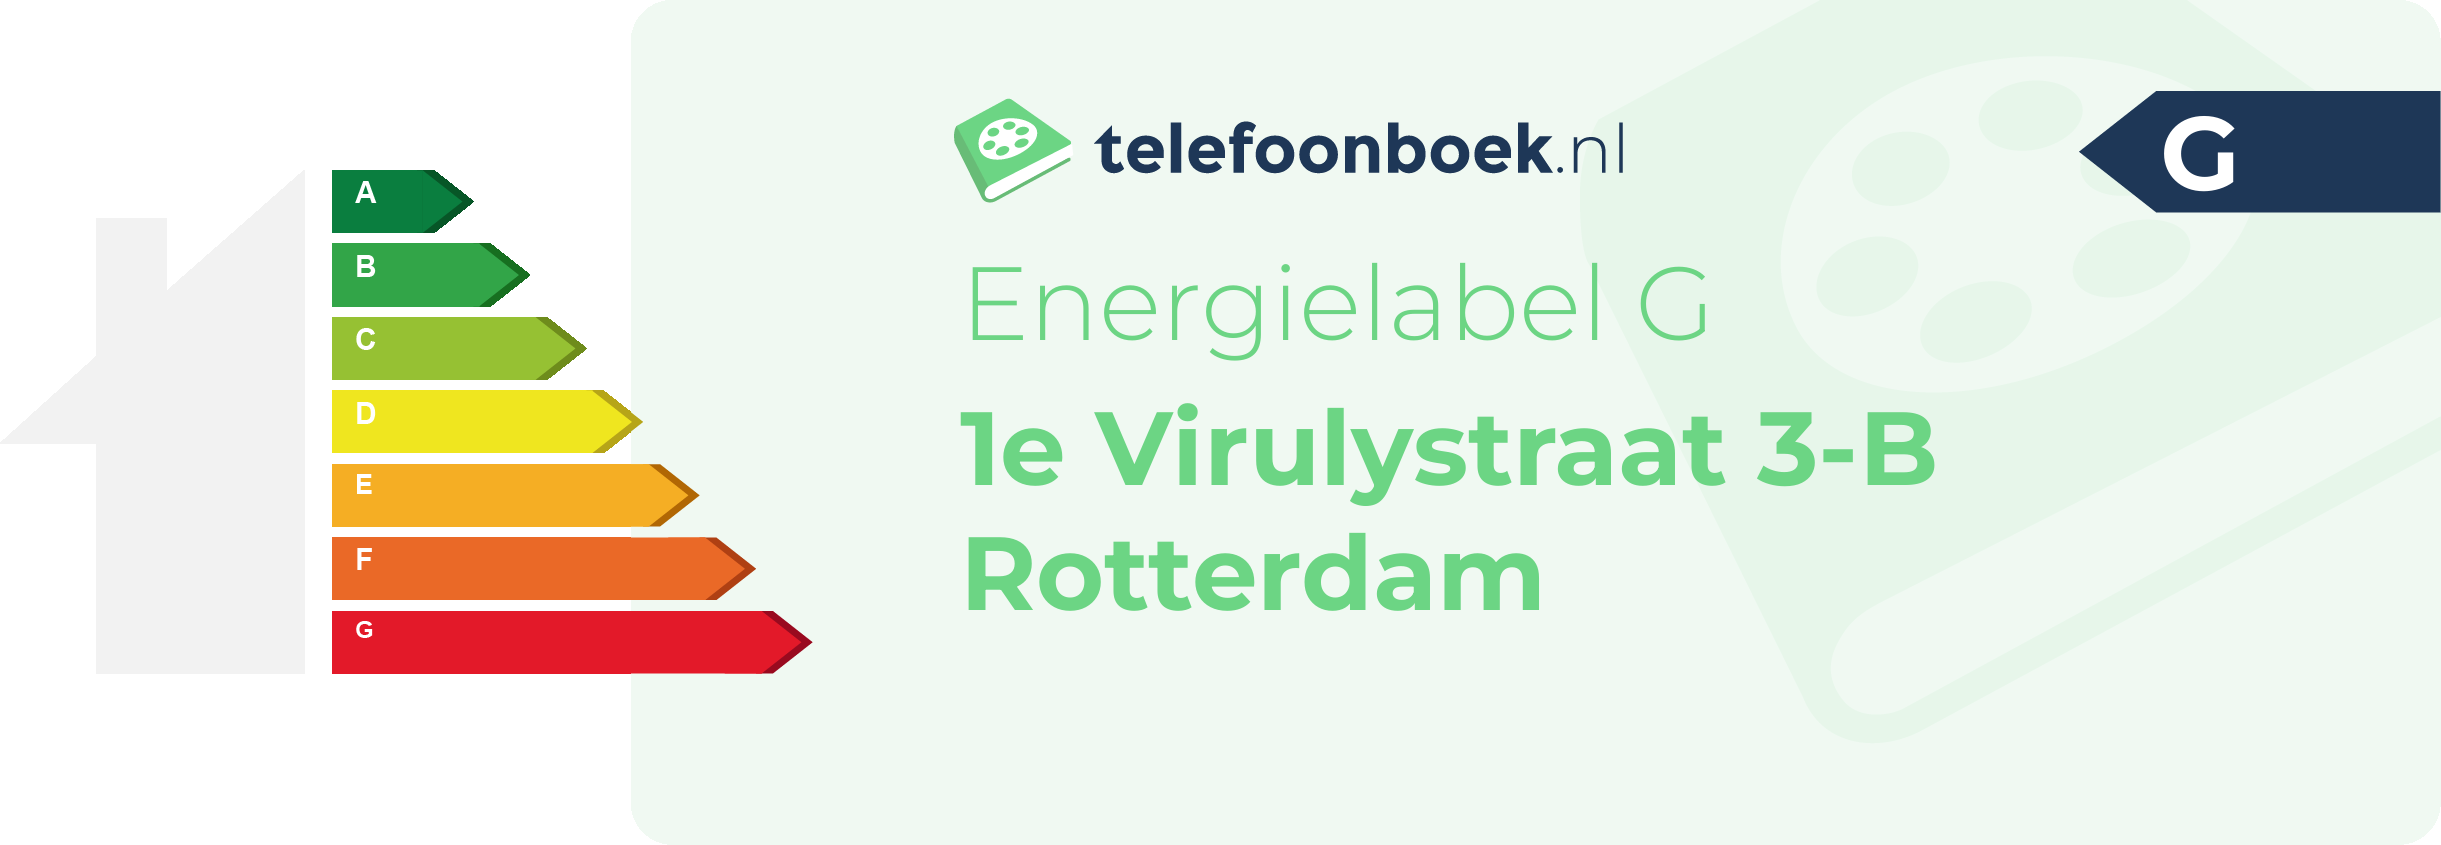 Energielabel 1e Virulystraat 3-B Rotterdam